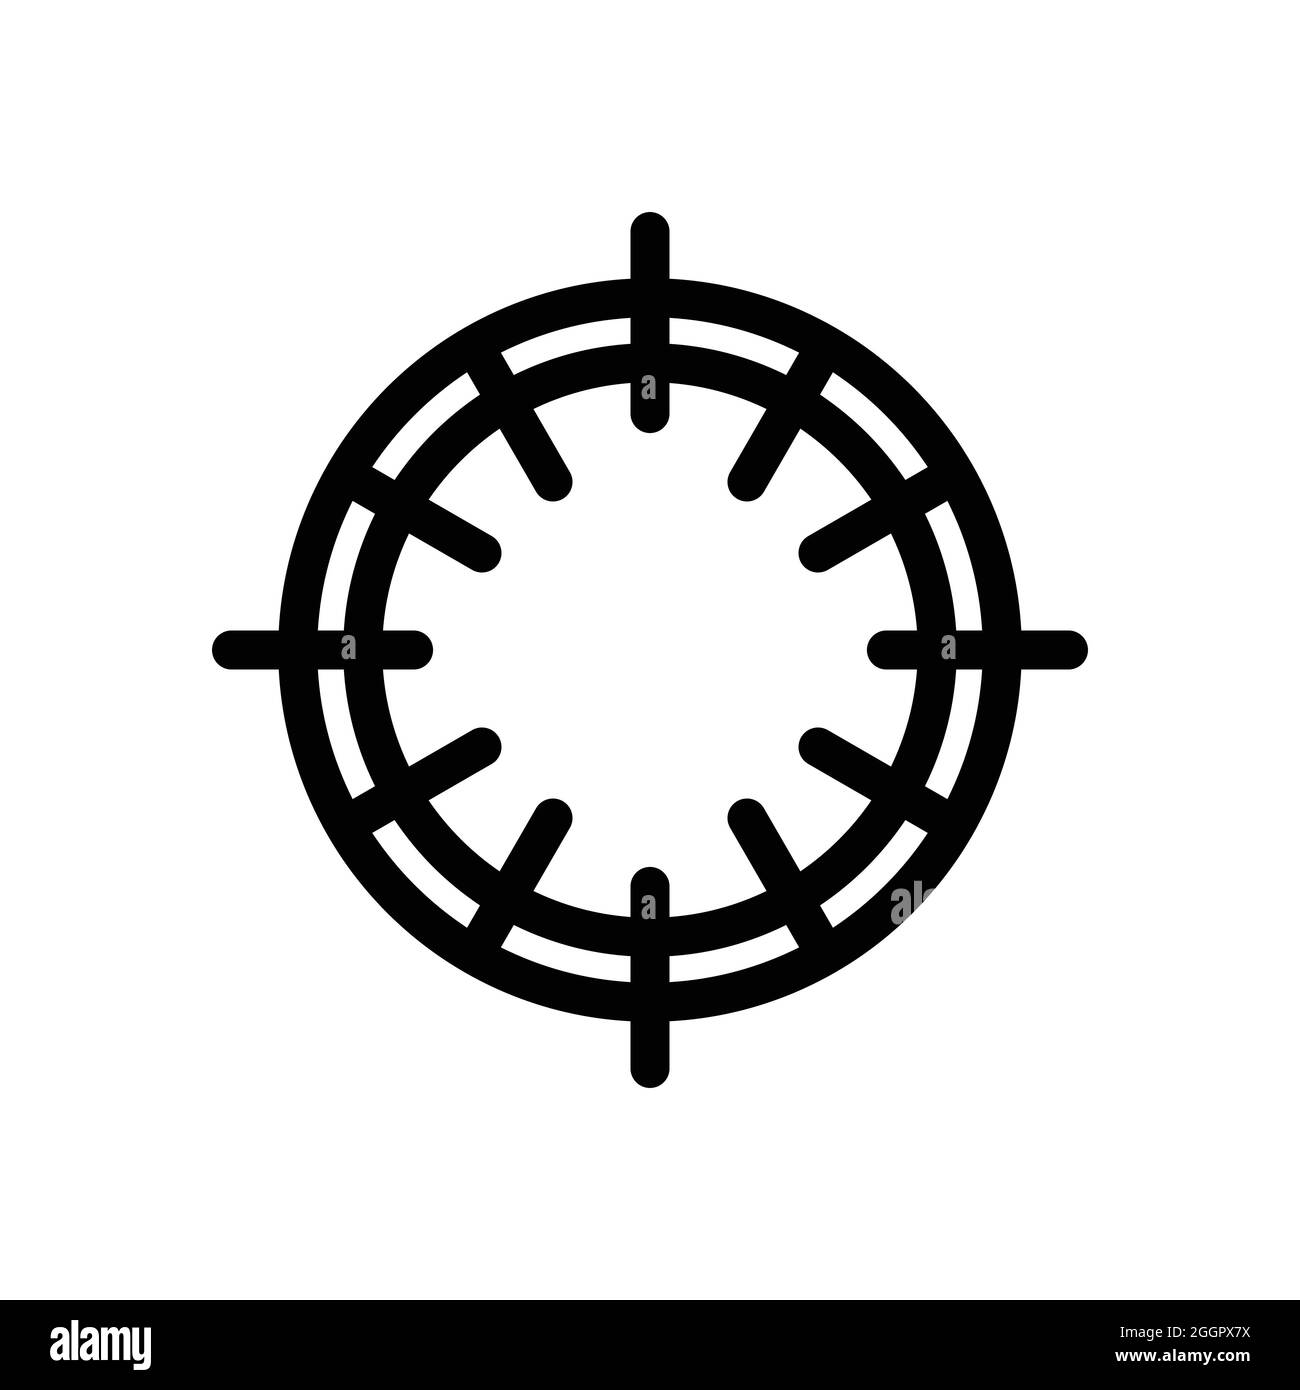 Target black sportive circular symbol - Sport & Games Icons